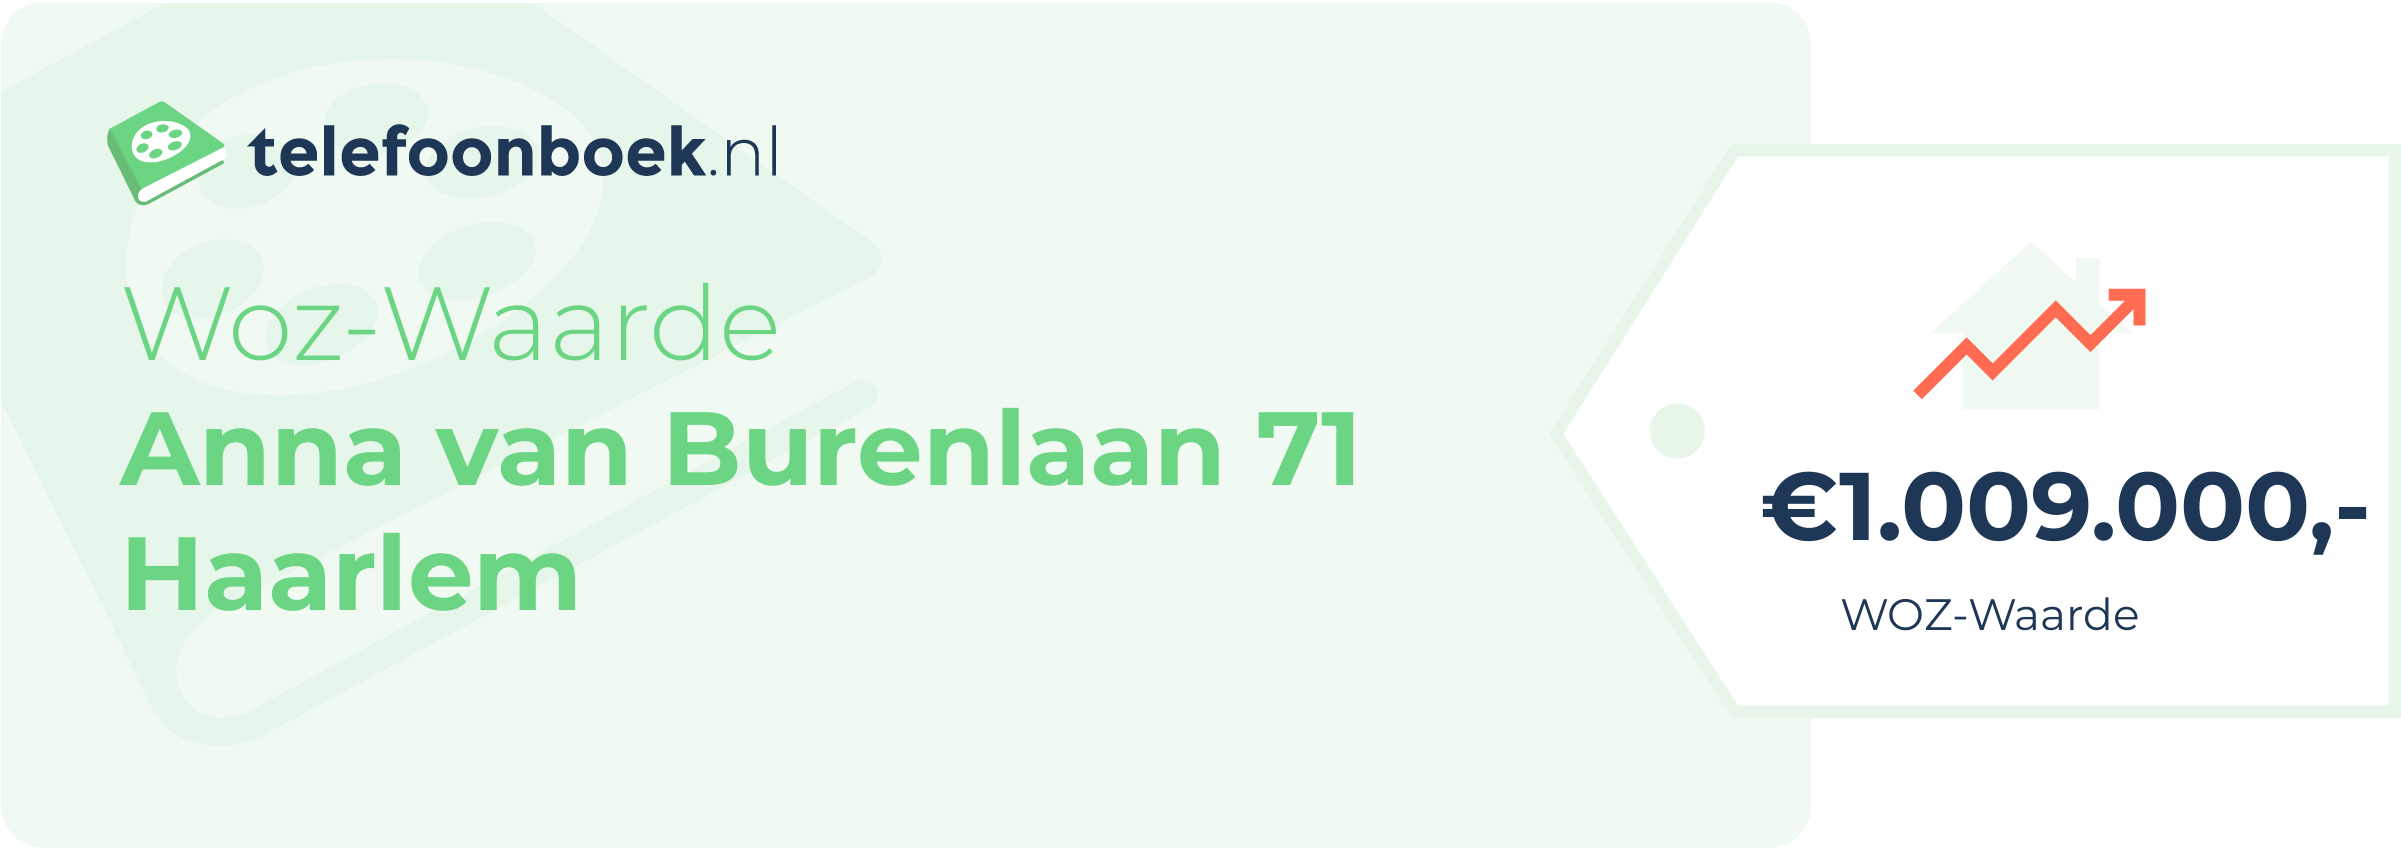 WOZ-waarde Anna Van Burenlaan 71 Haarlem